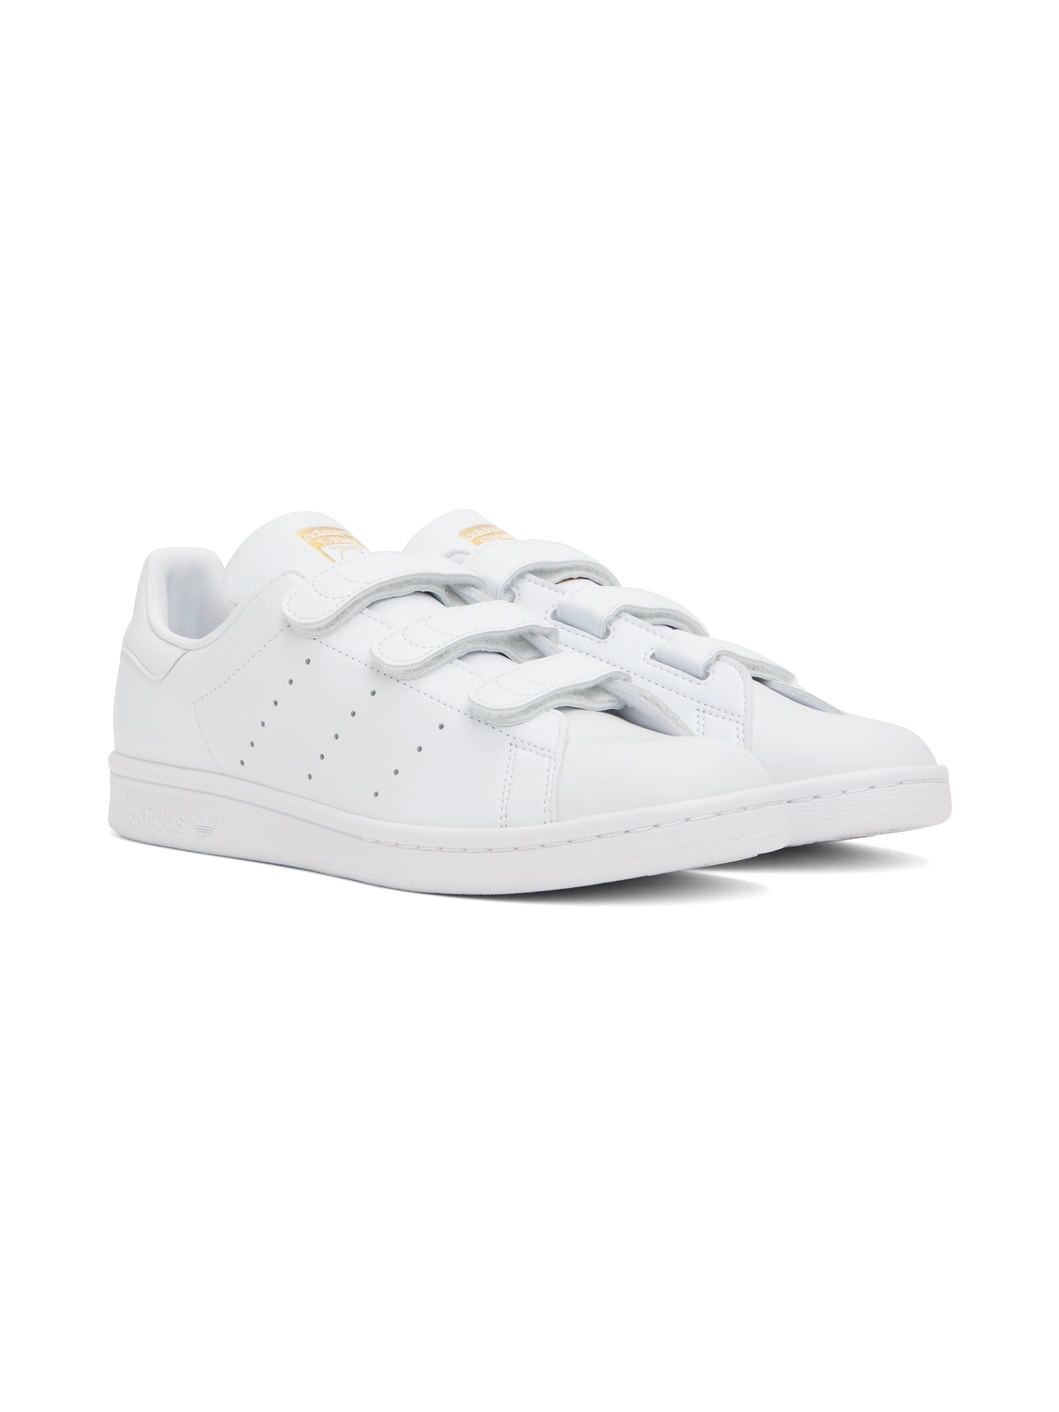 White & Gold Stan Smith Sneakers - 4